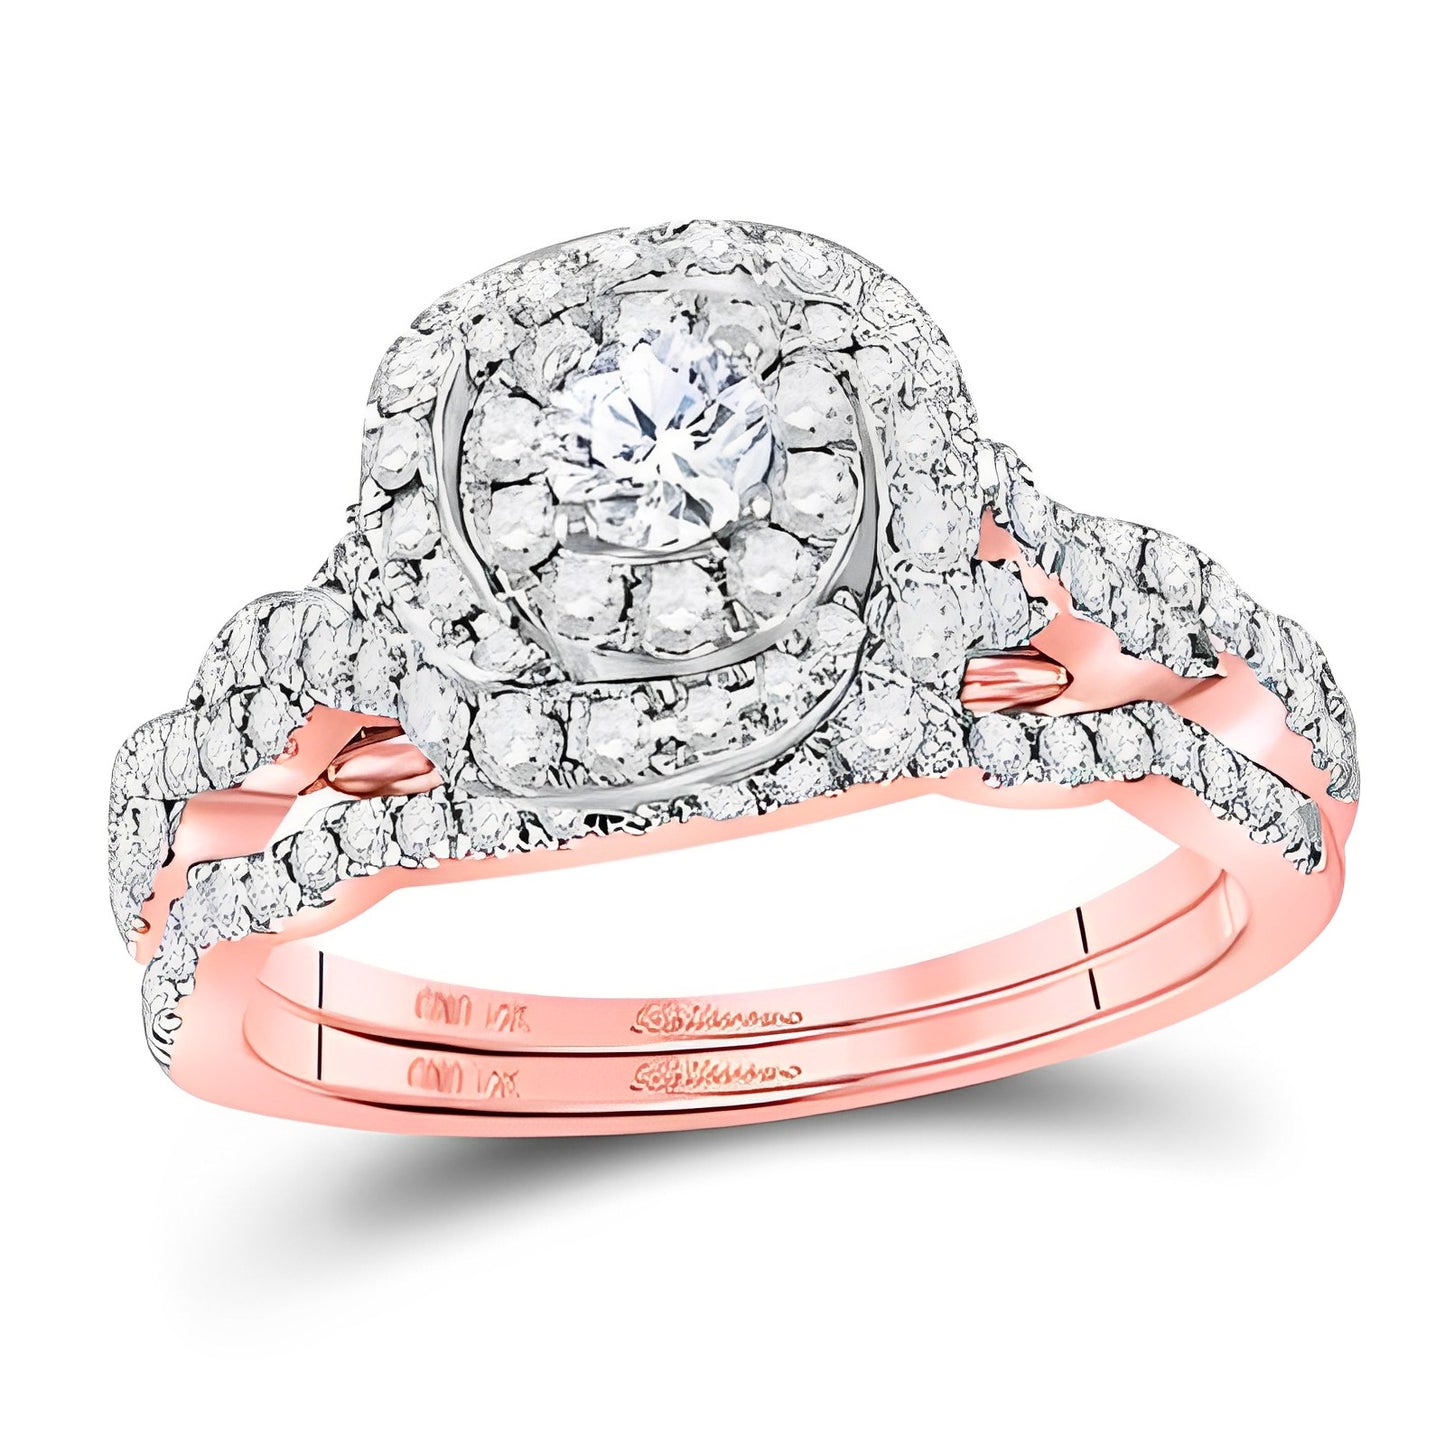 14K TWO-TONE GOLD ROUND DIAMOND HALO BRIDAL WEDDING RING SET 1 CTTW (CERTIFIED)